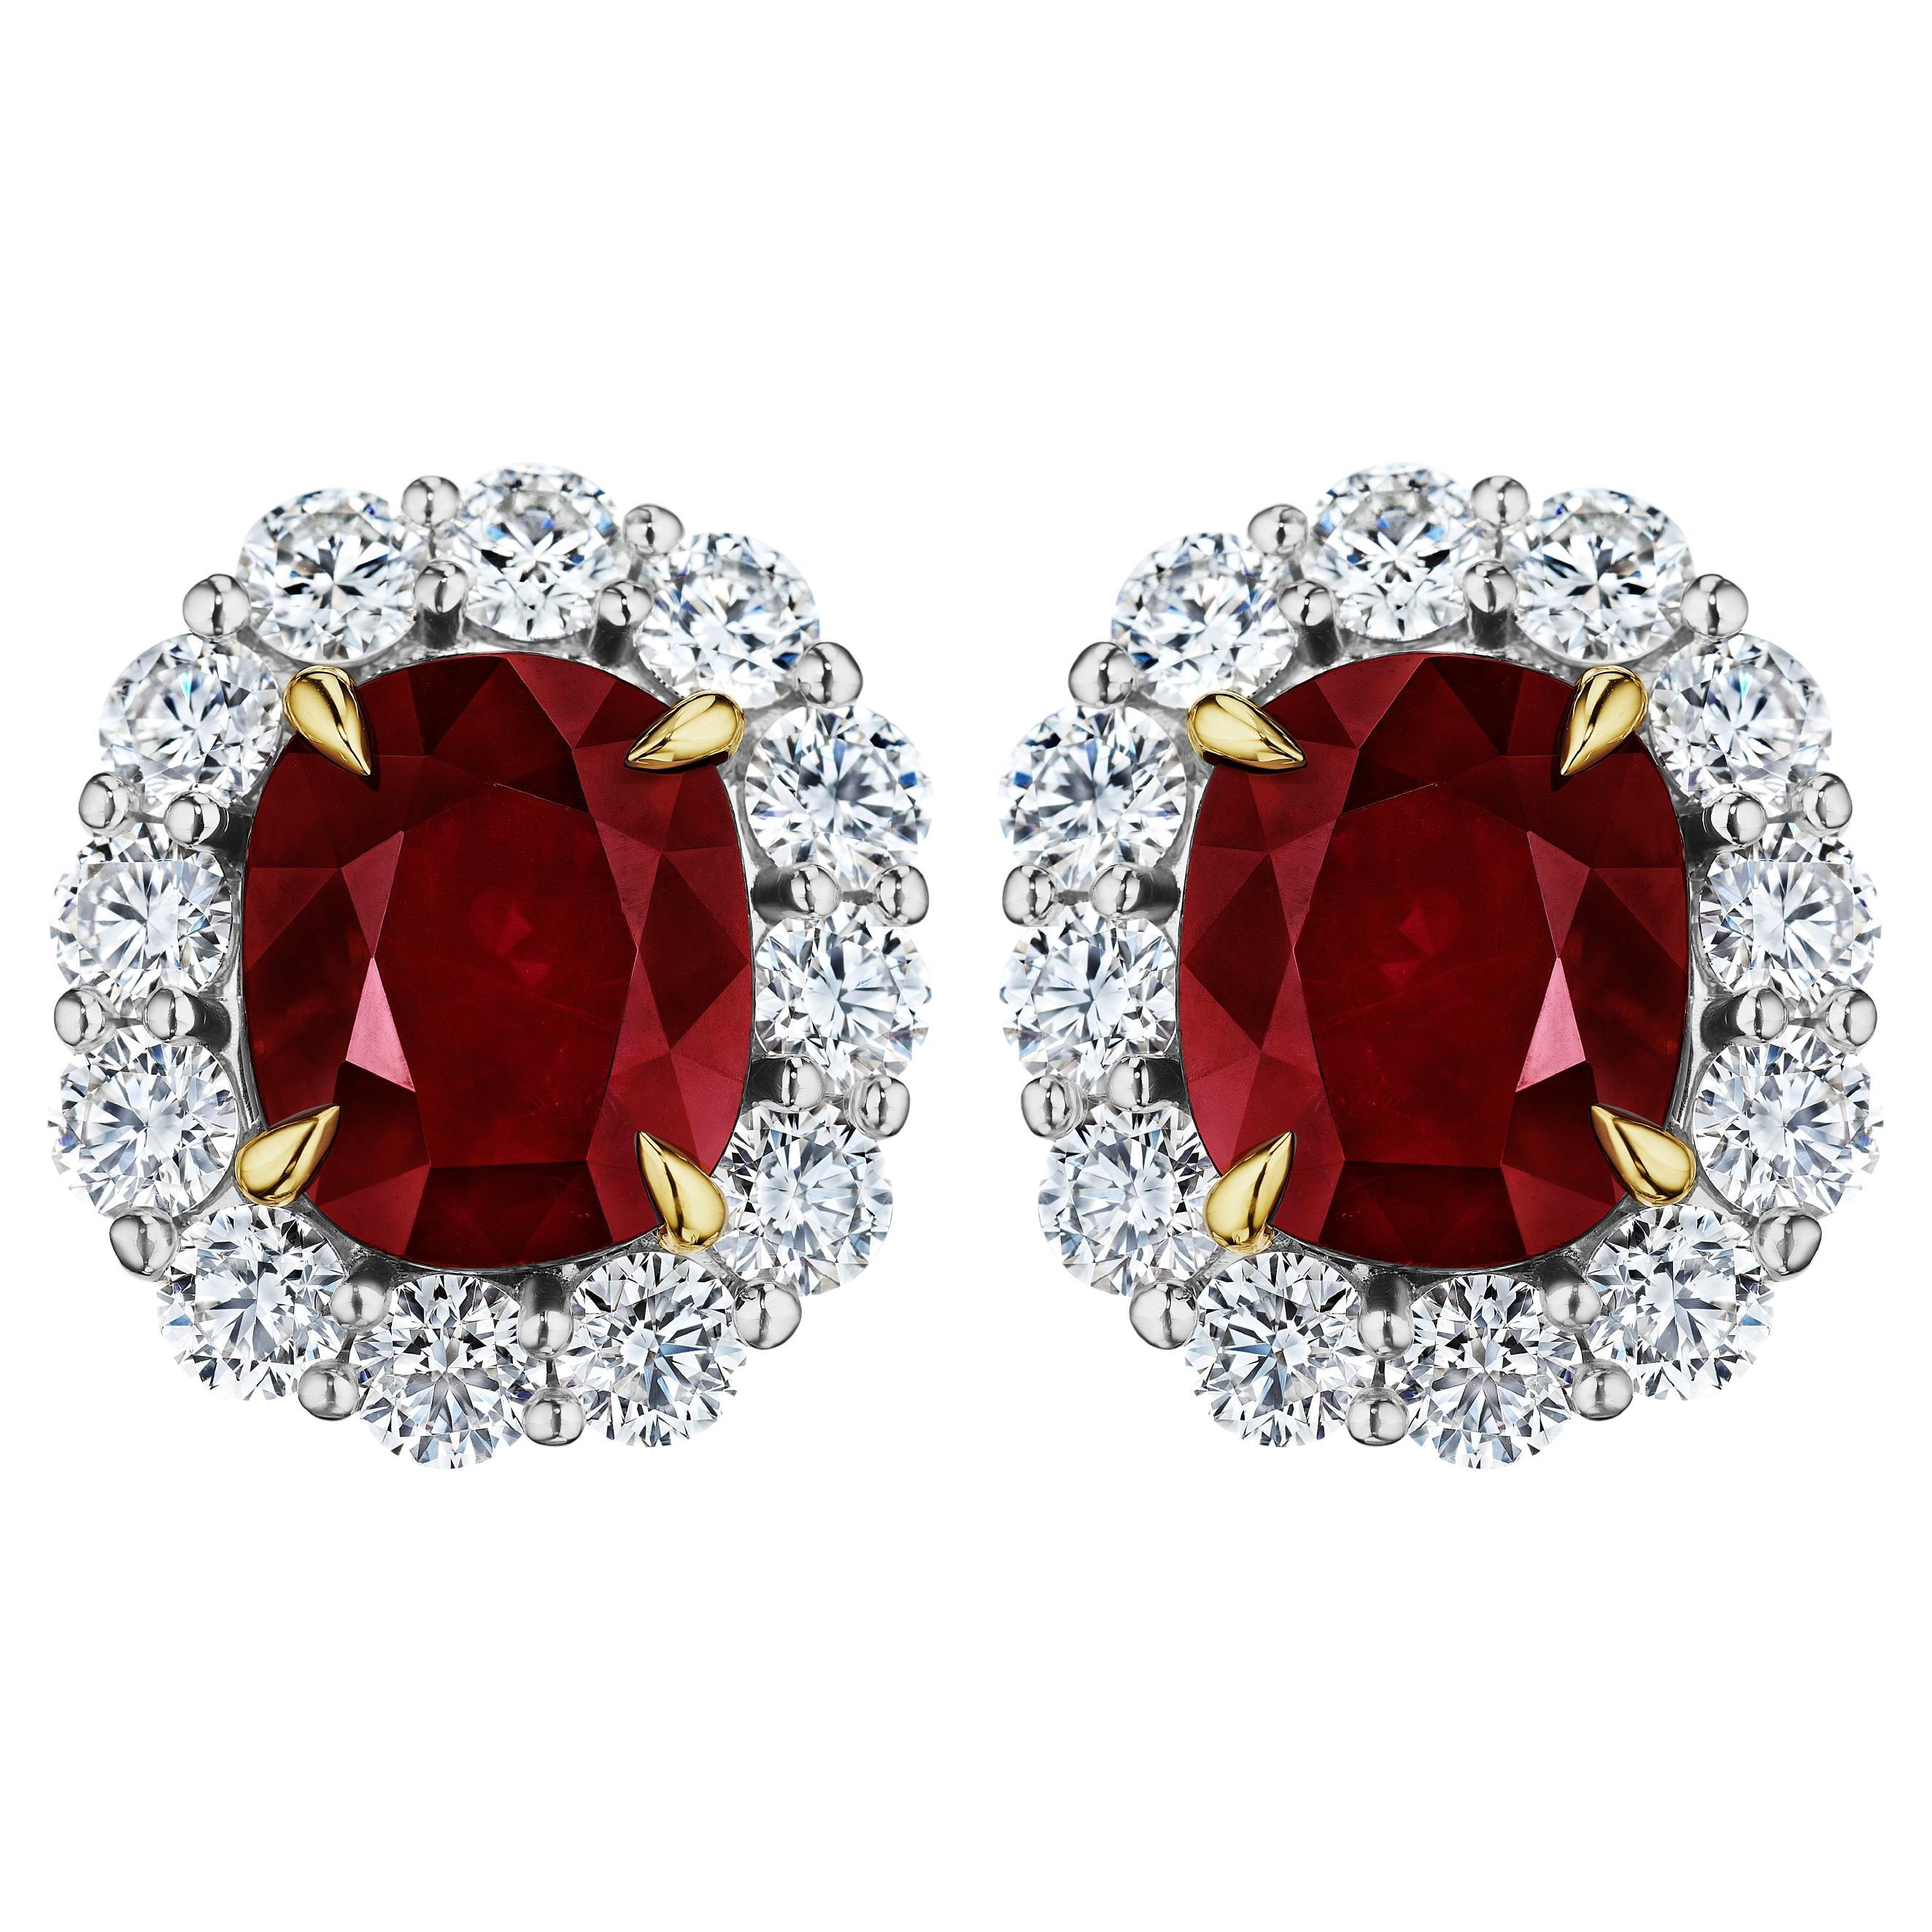 13.34ct GRS Certified Ruby & Diamond Earrings in Platinum & 18KT Gold